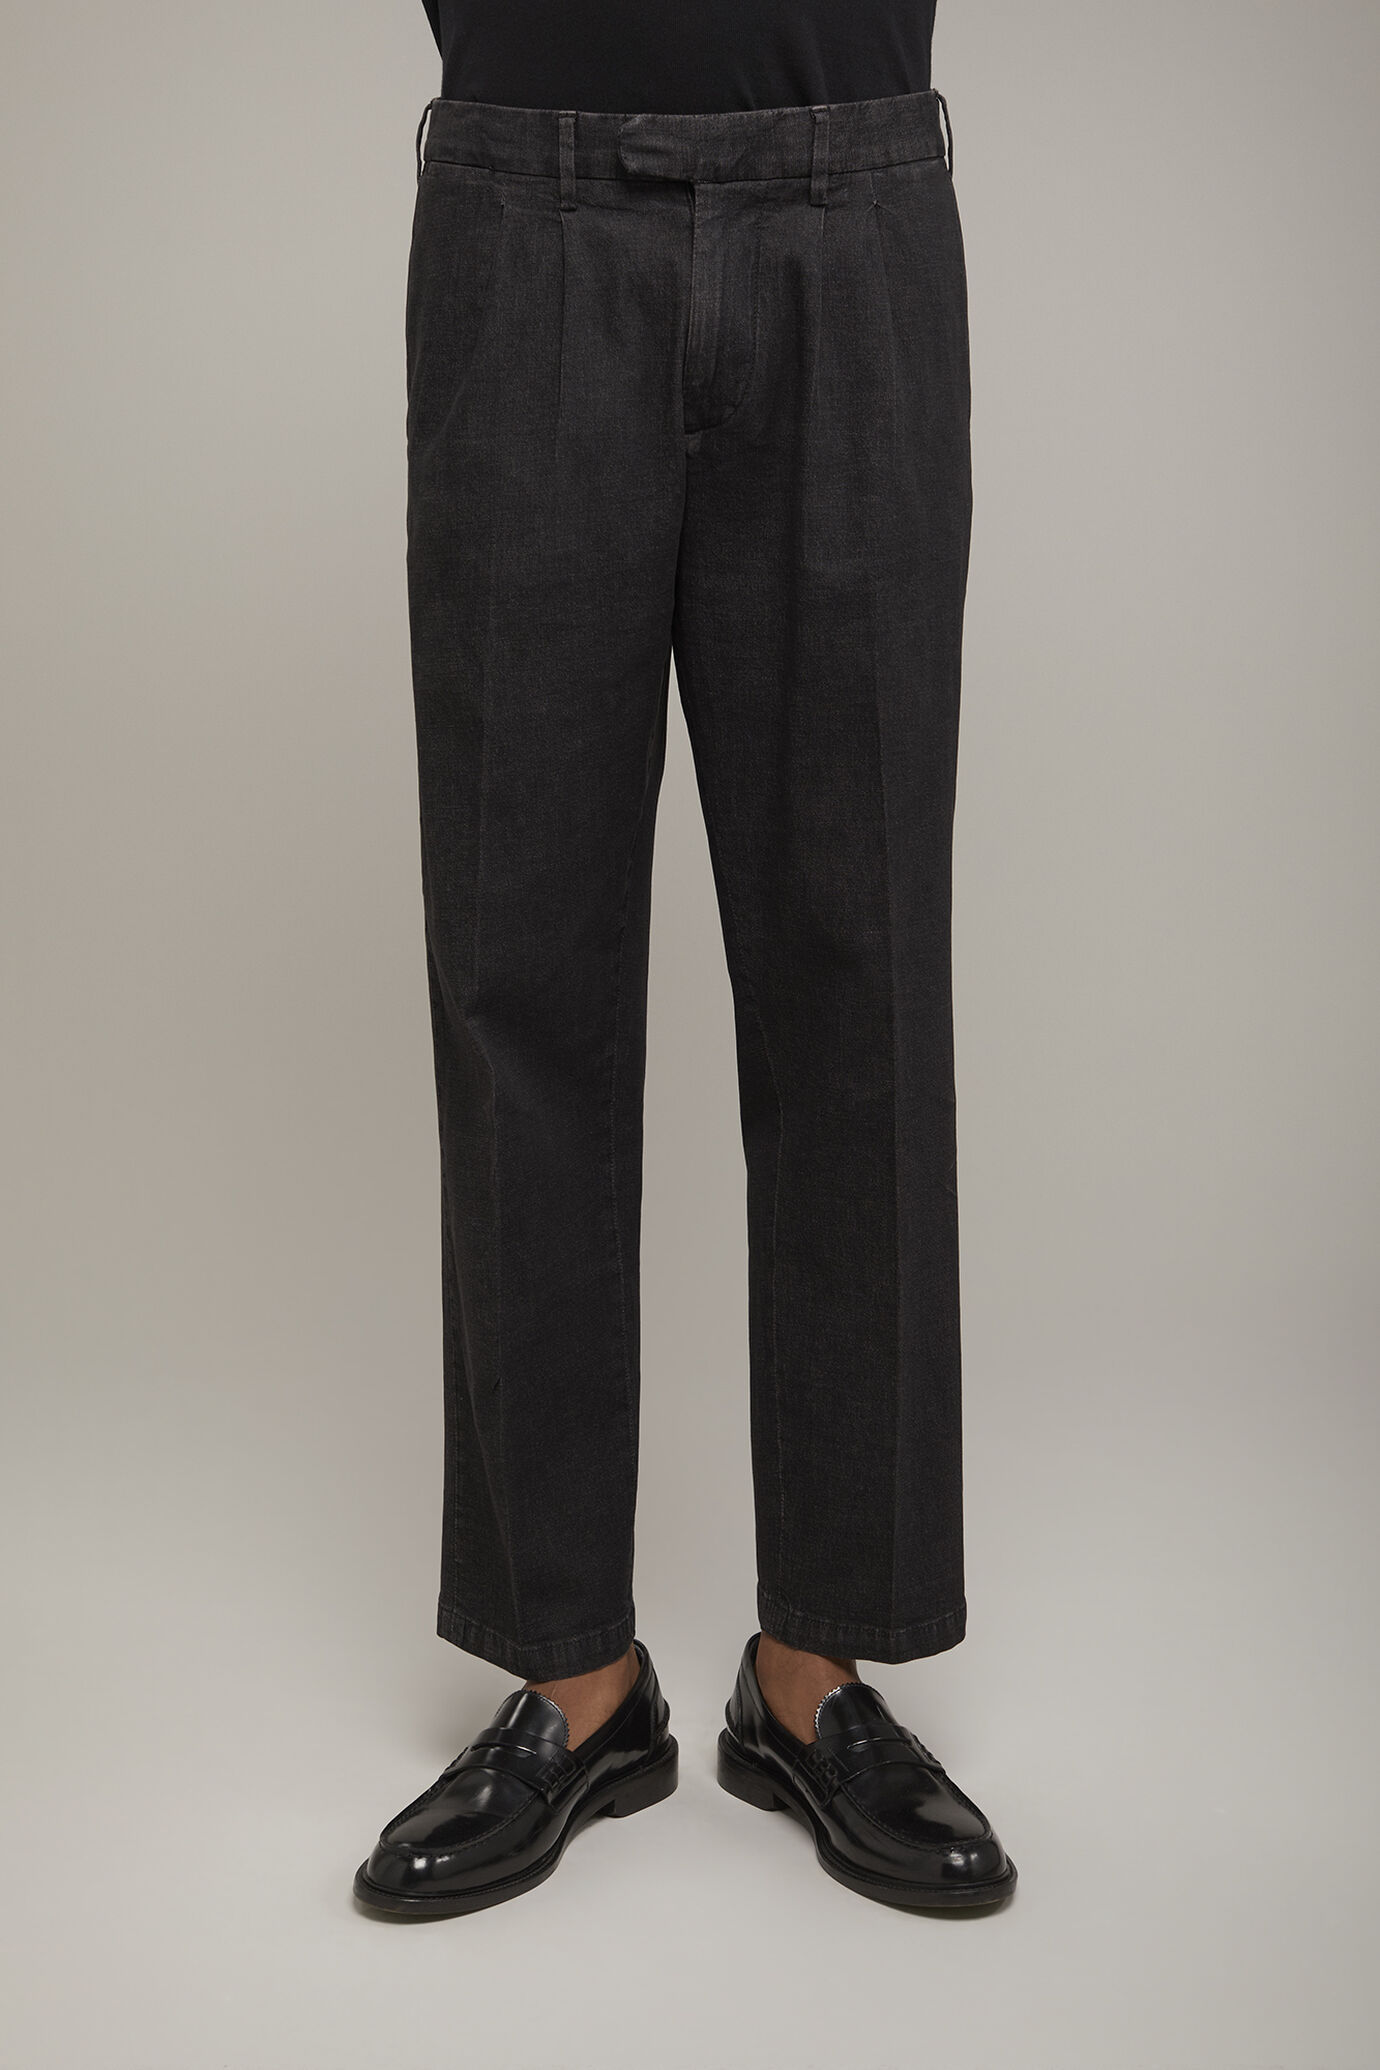 Pantalone tecnico uomo con doppia pinces tessuto denim leggero comfort fit image number 3